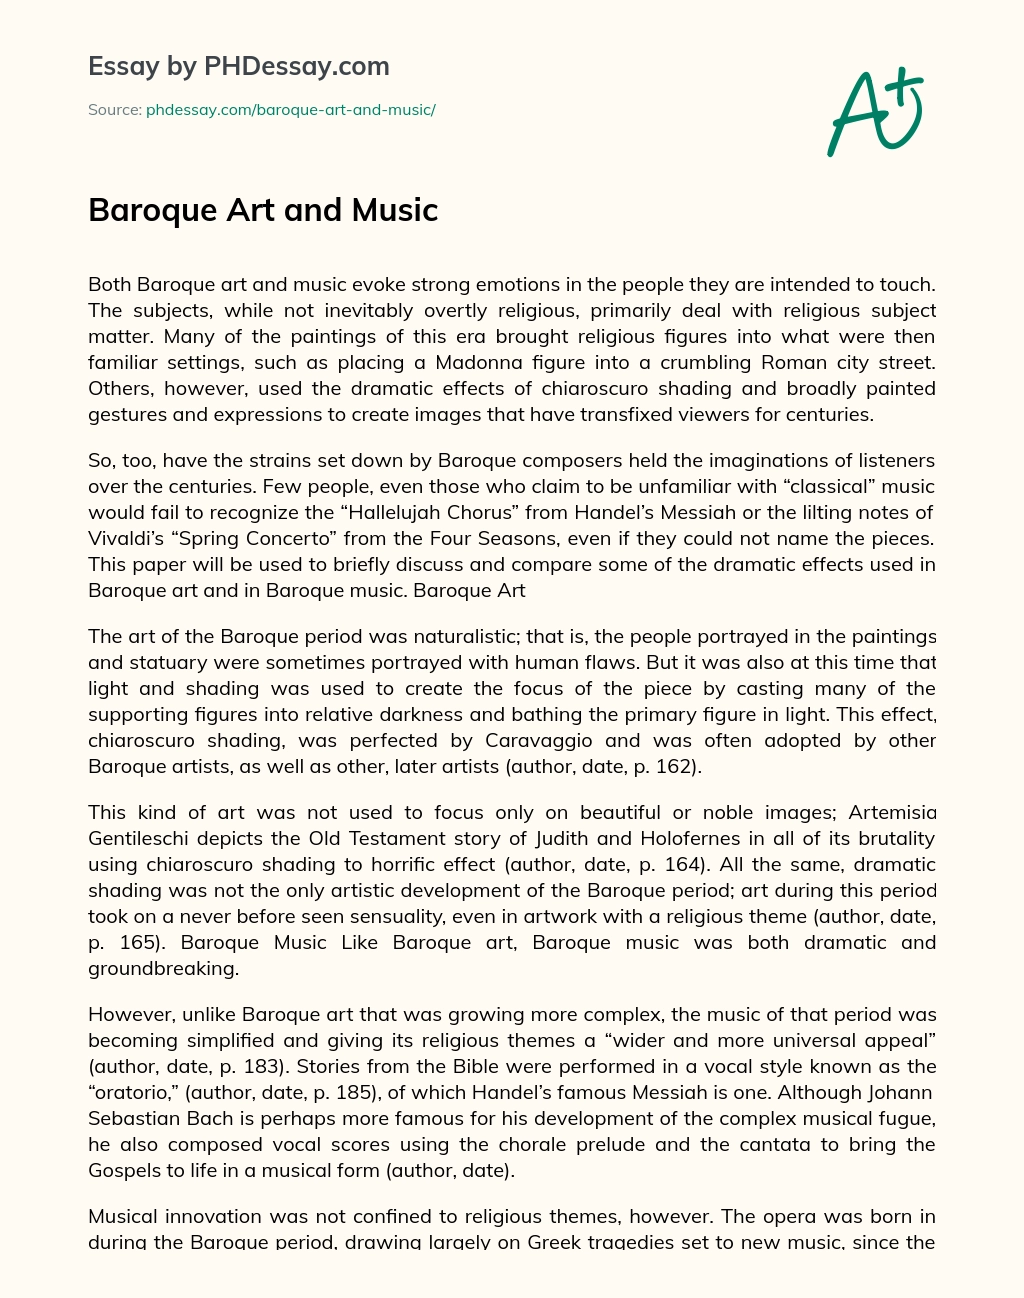 Baroque Art and Music essay